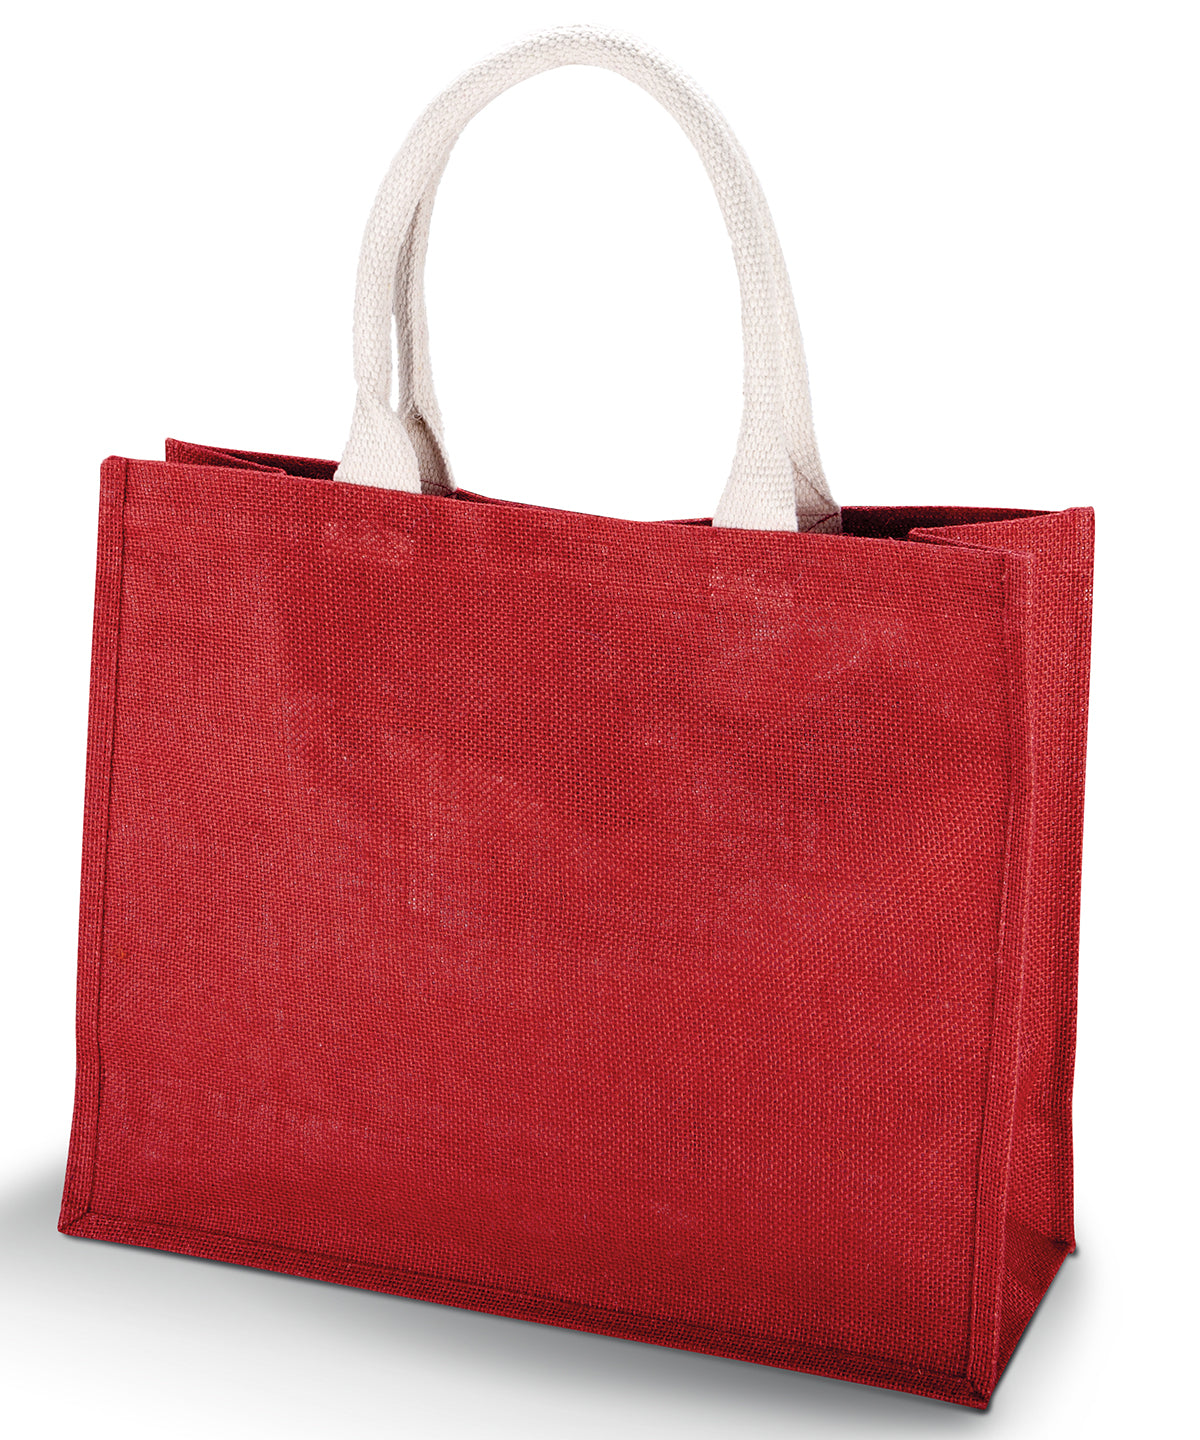 Personalised Bags - Dark Red KiMood Jute beach bag